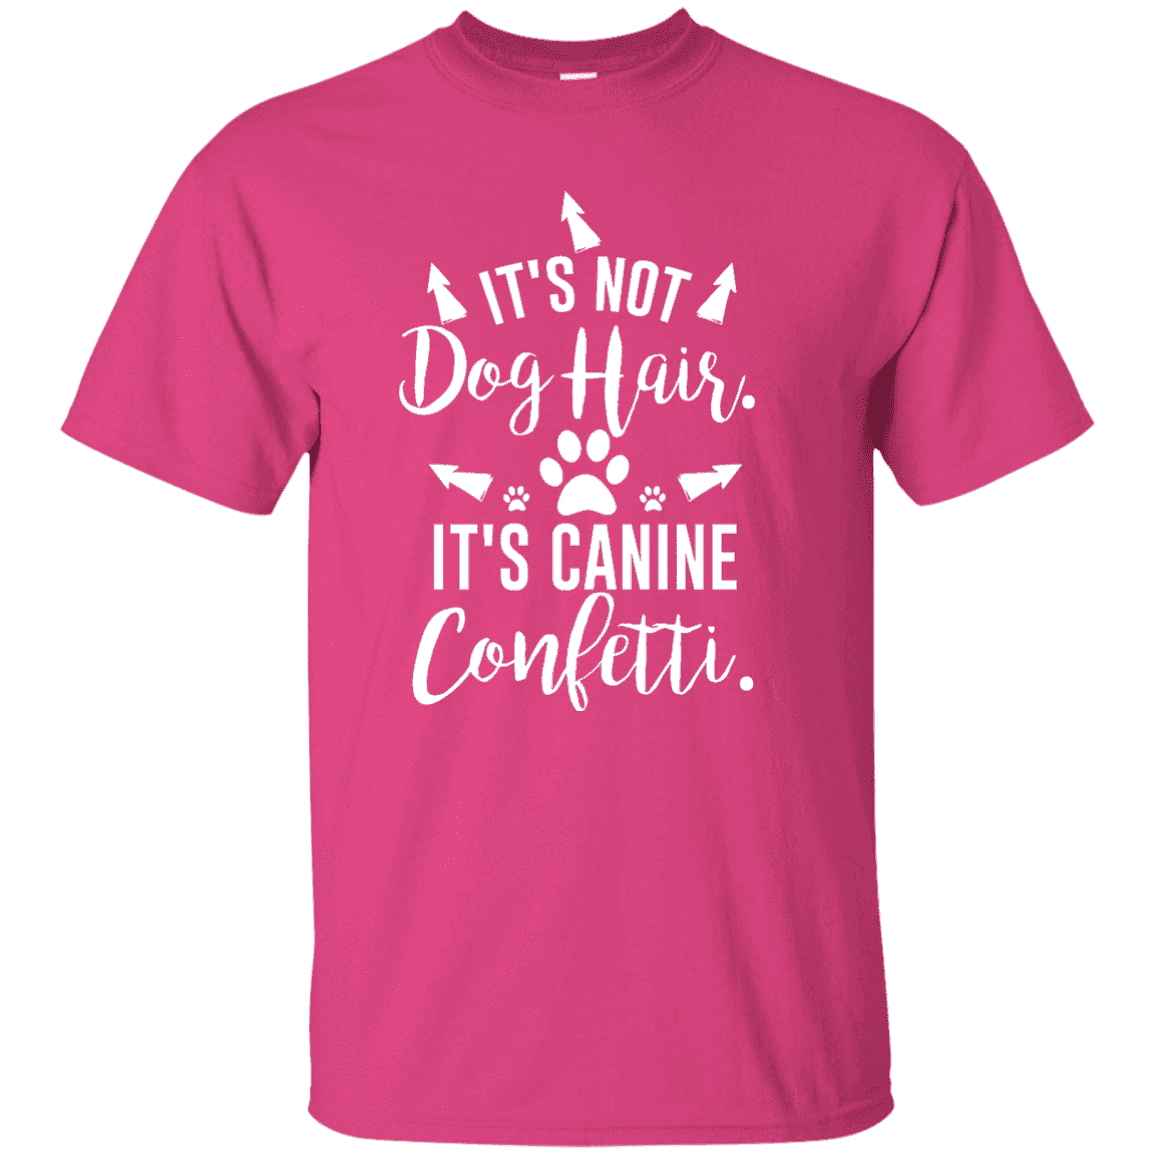 Canine Confetti - T Shirt.